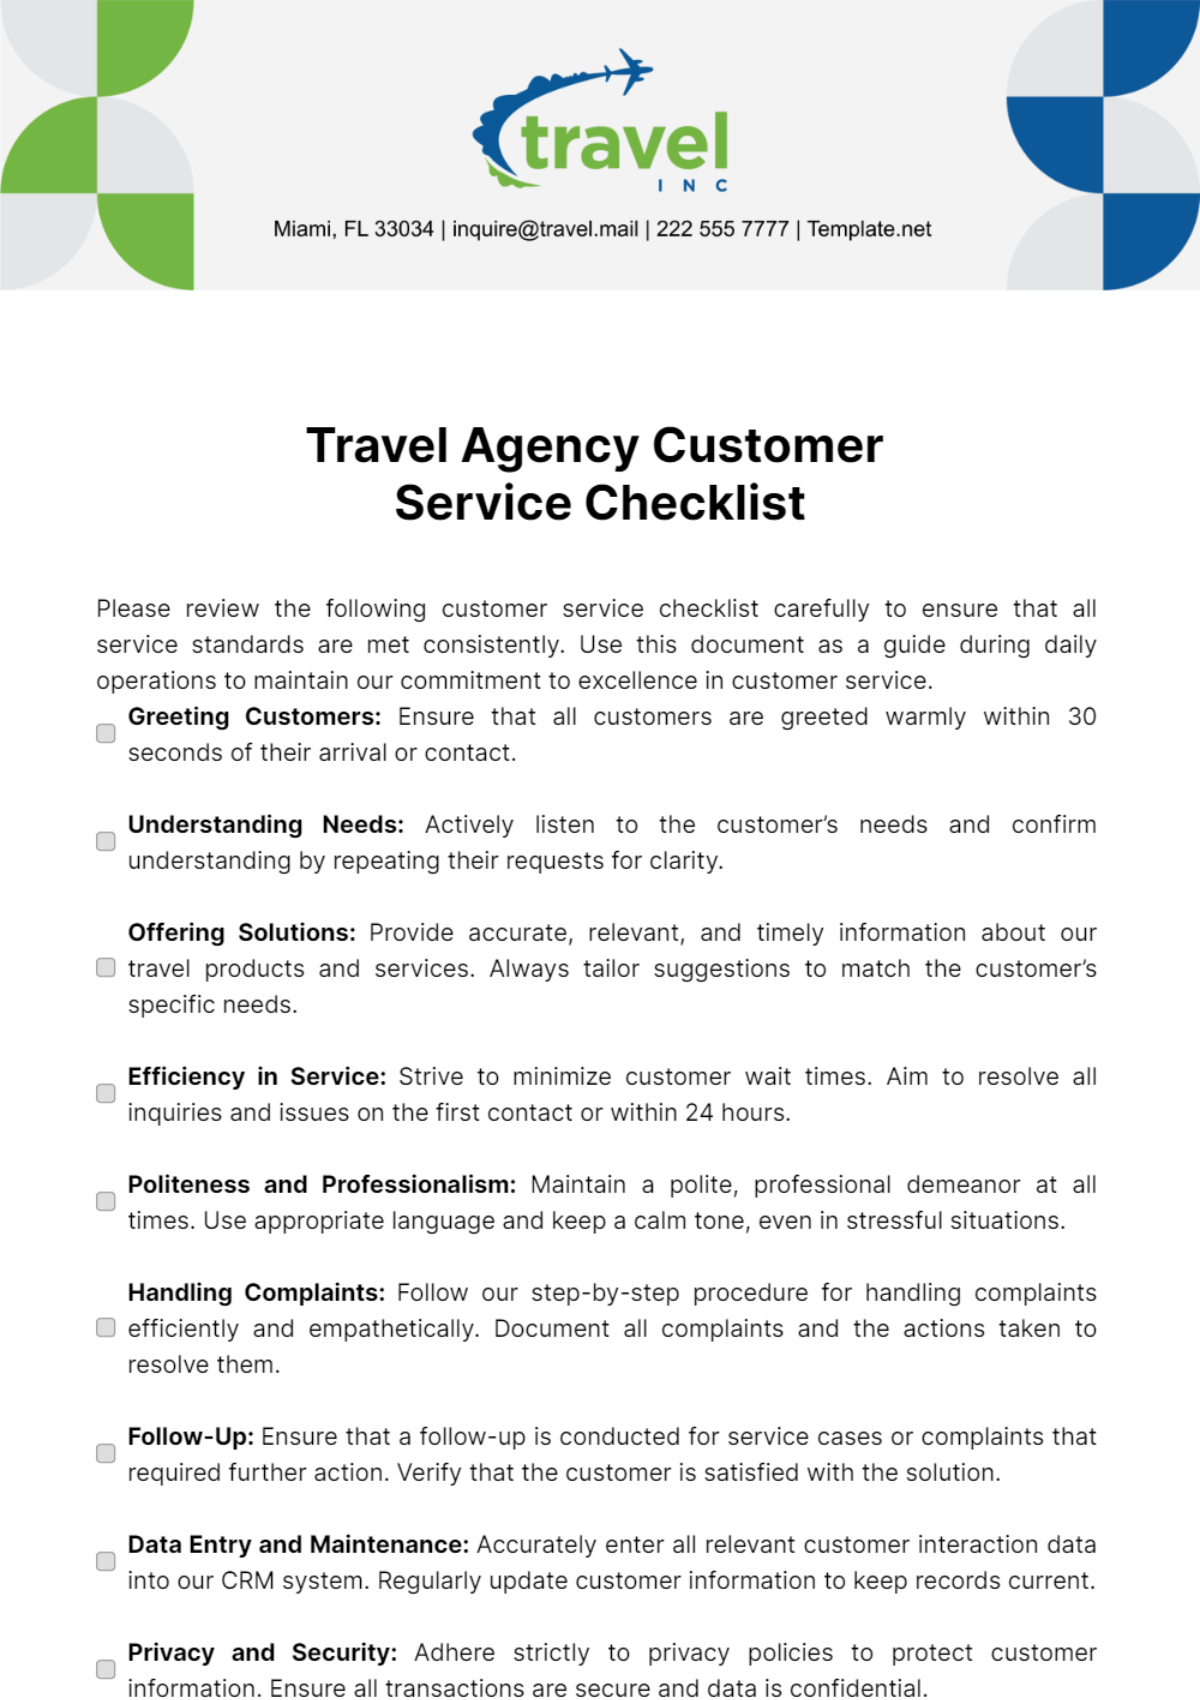 Travel Agency Customer Service Checklist Template